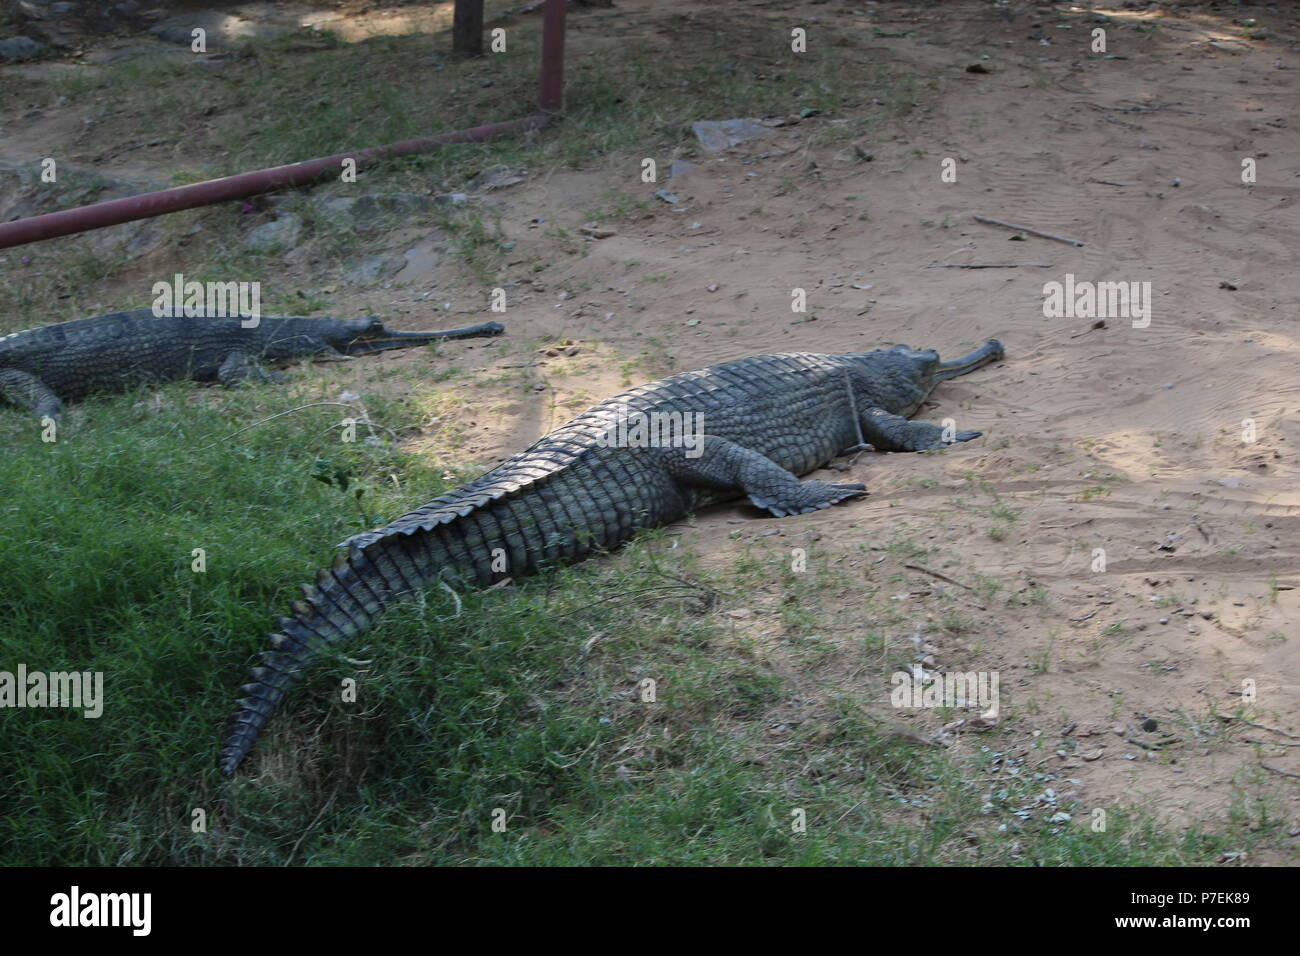 Crocodiles at Jaipur Zoo Stock Photo